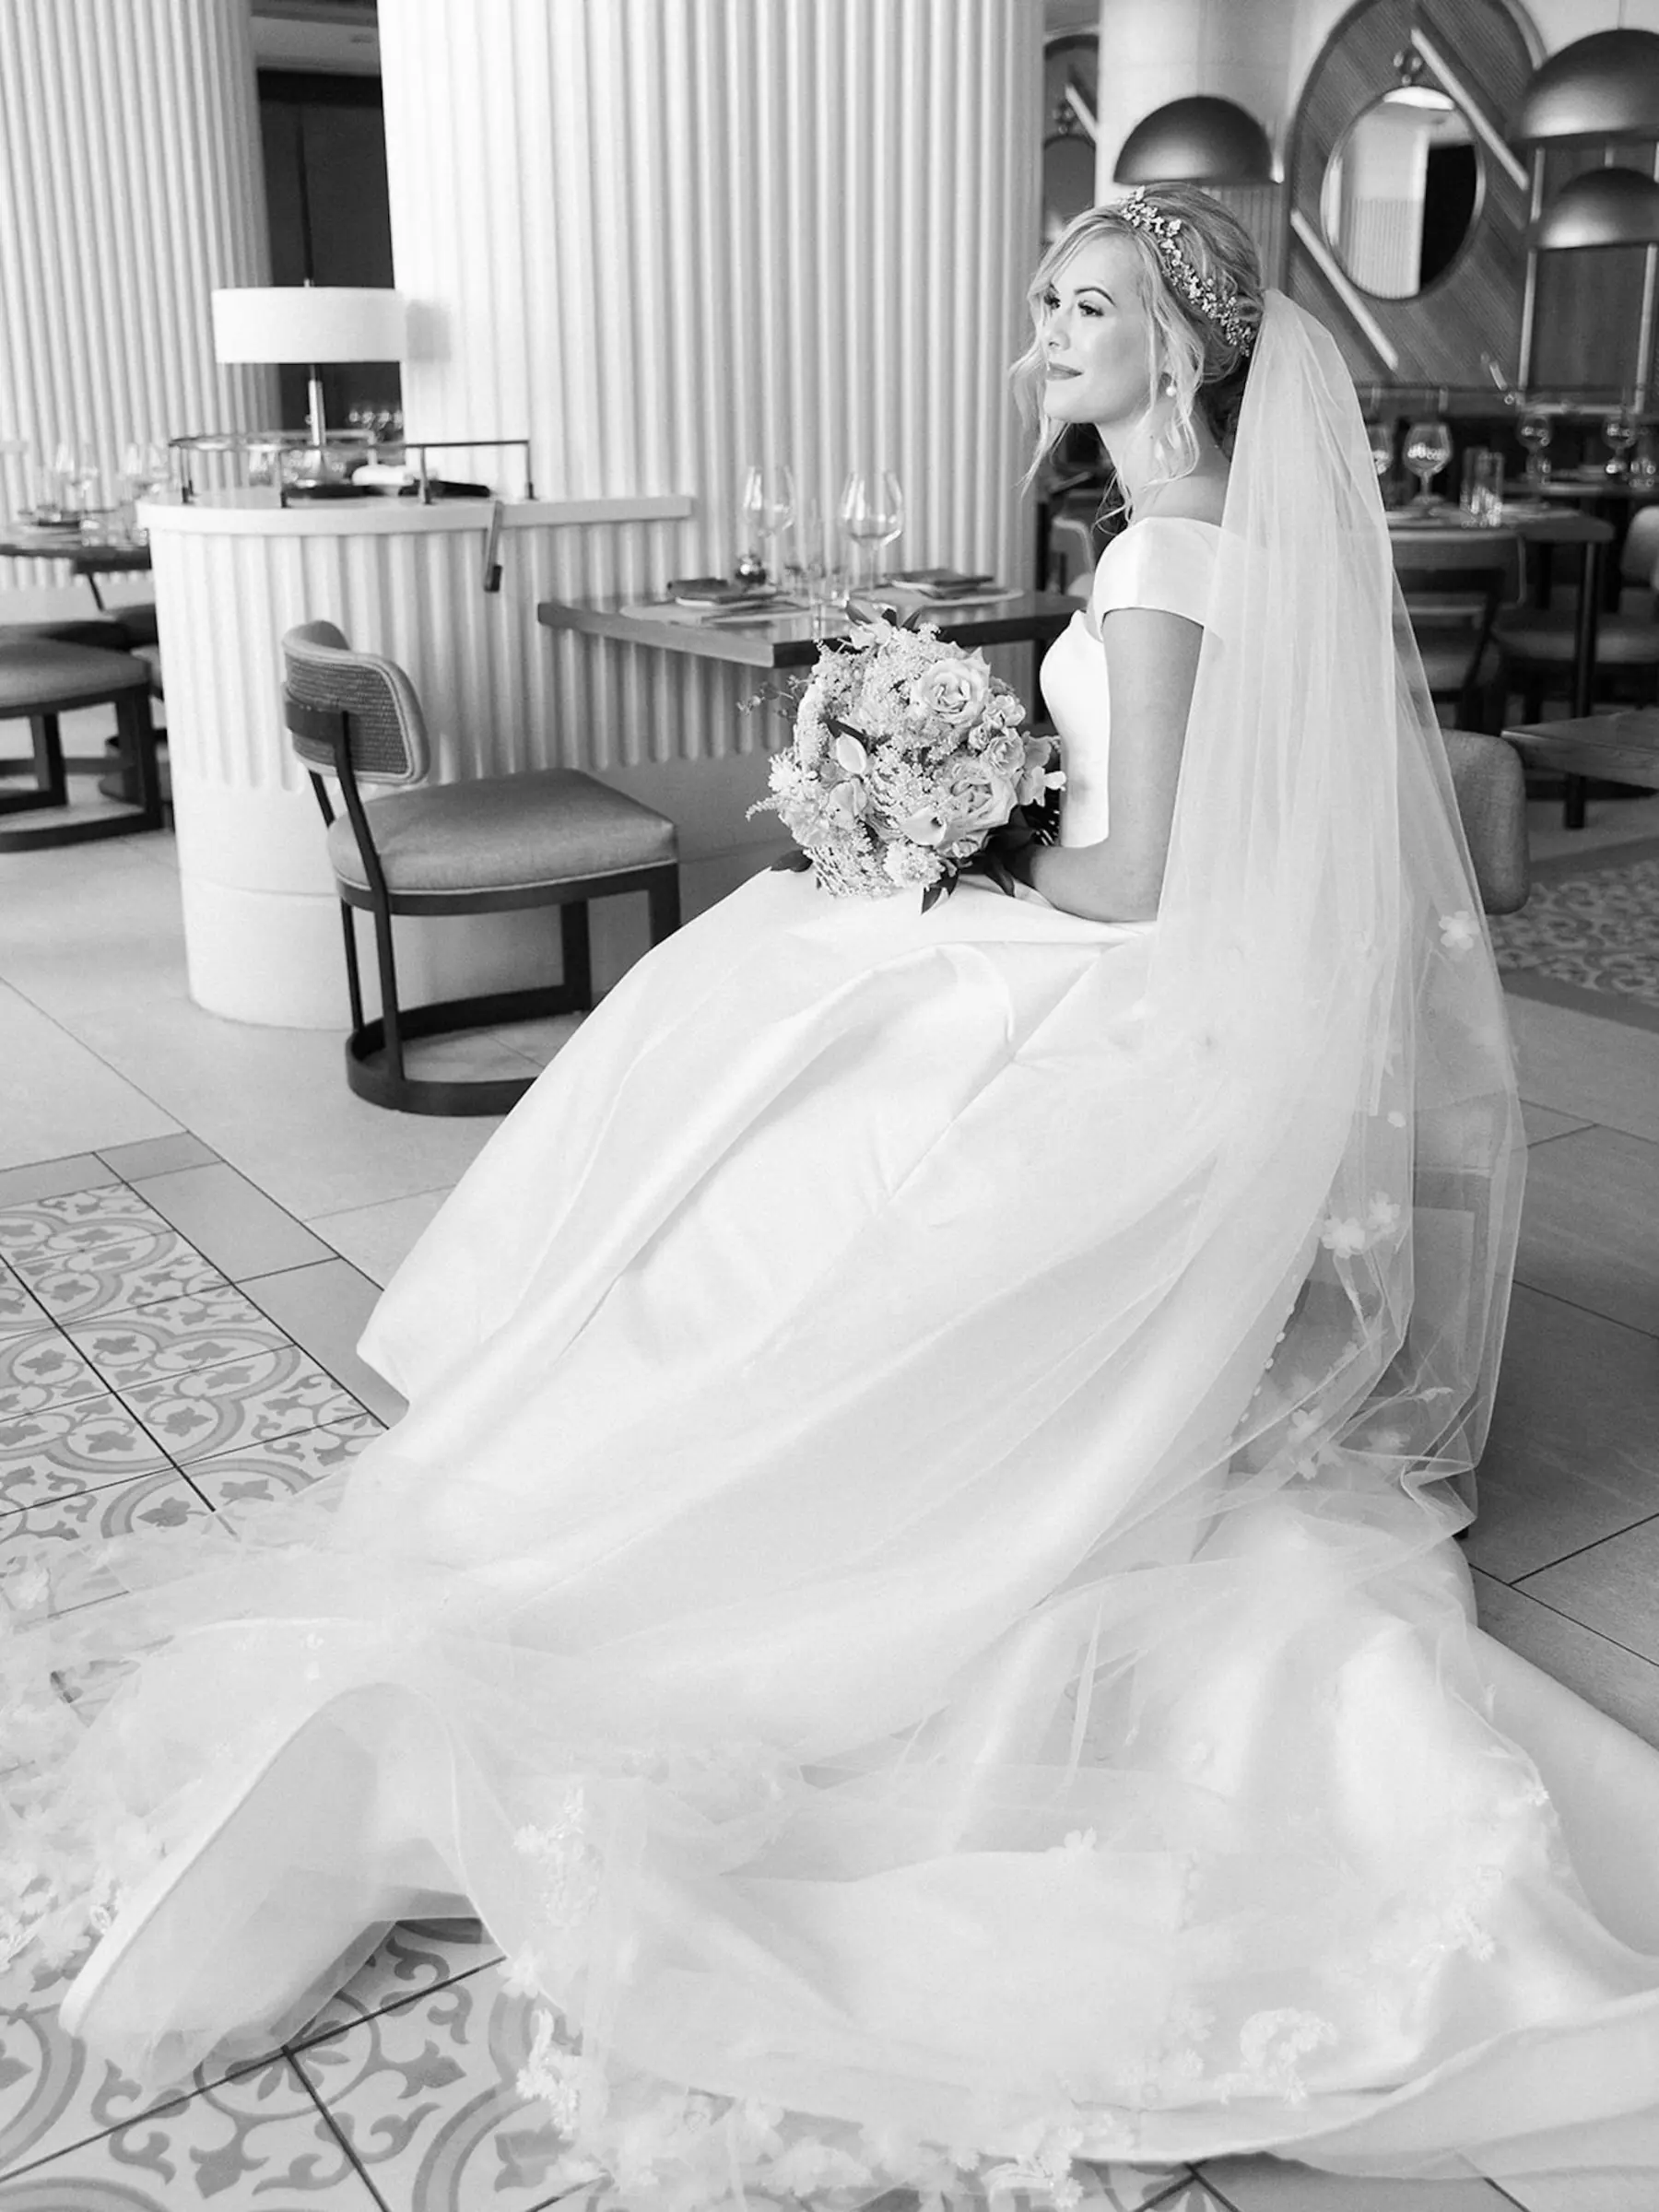 Classic White Cap Sleeve A-Line Ballgown Sareh Nouri Wedding Dress and Flower Applique Veil Inspiration | Cathedral Length Veil Ideas